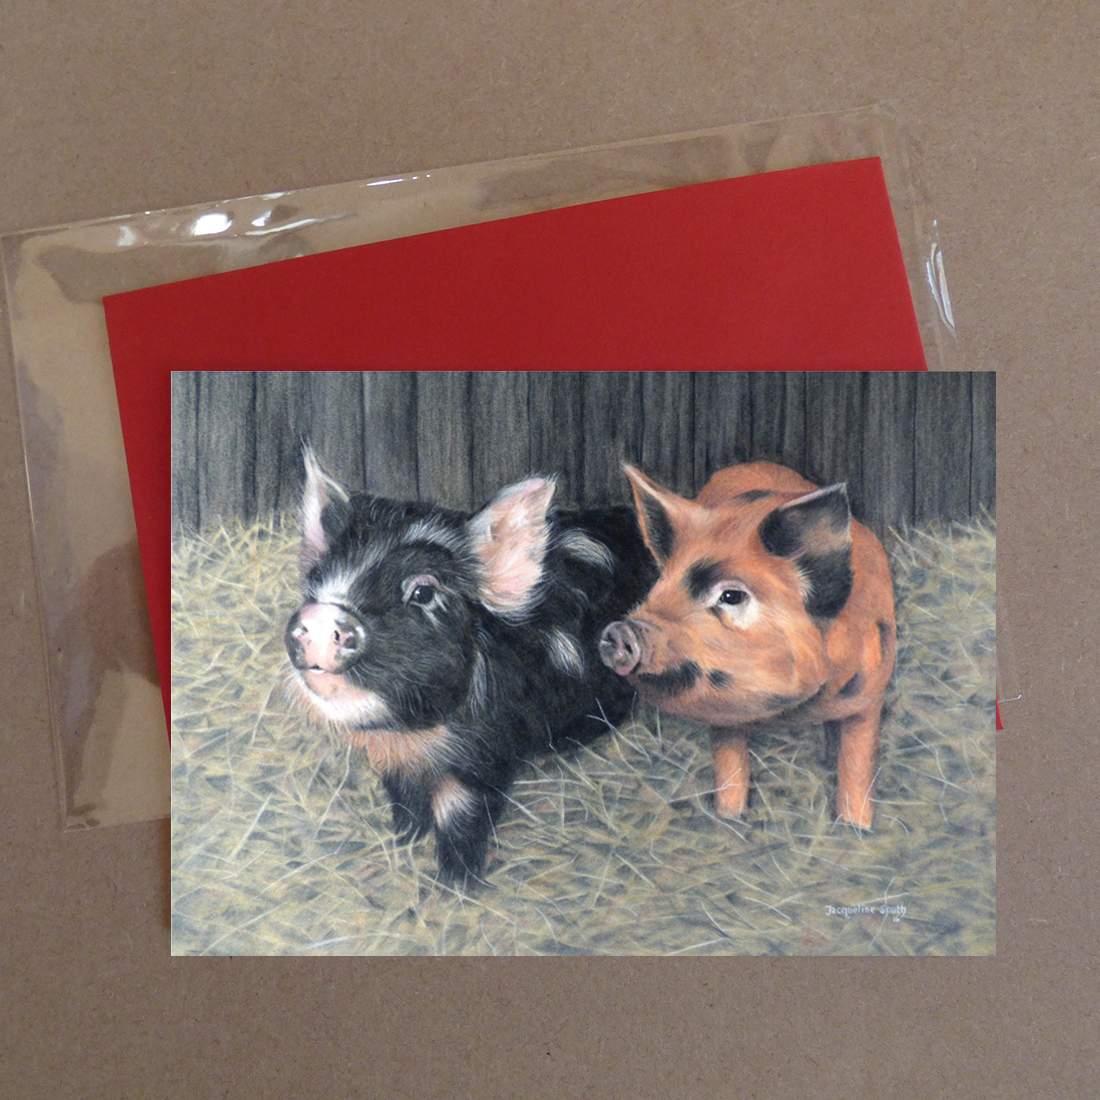 Pigs Greeting Card